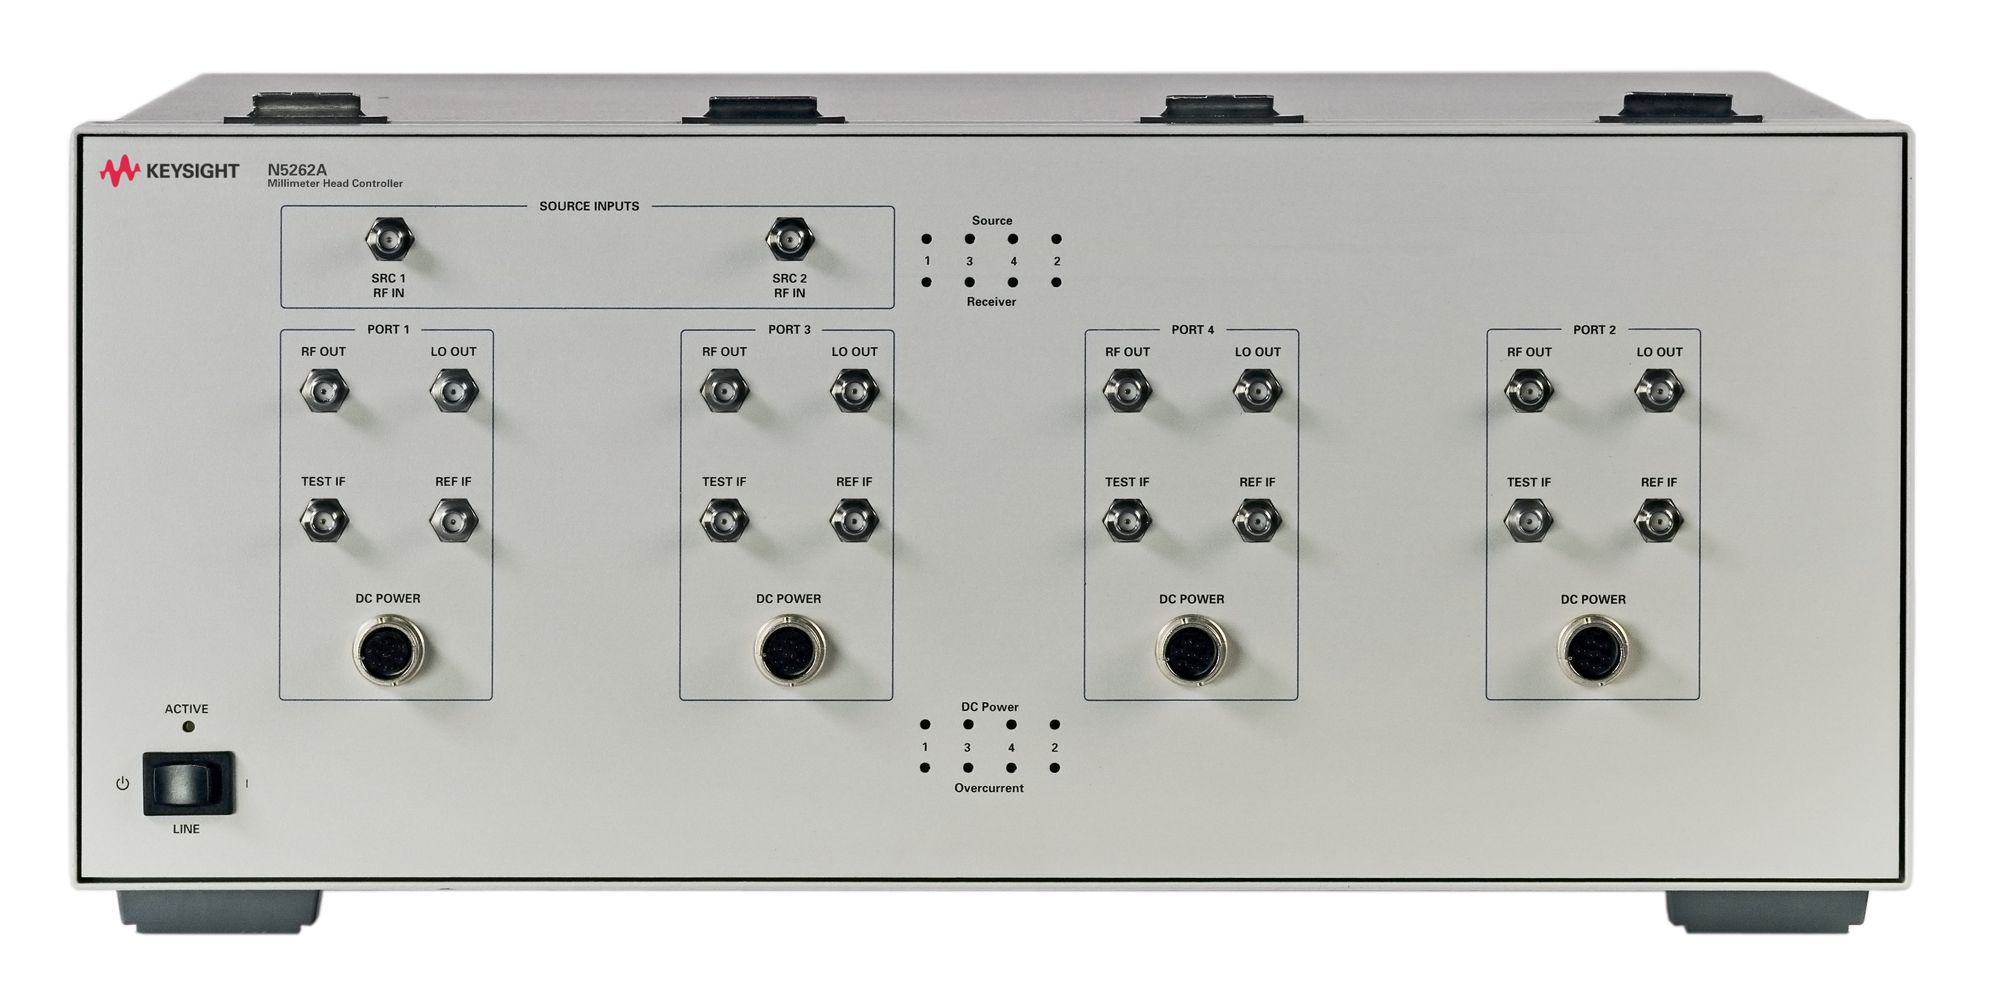 N5262A-104 - Keysight (Agilent) Millimeter-Wave Controller